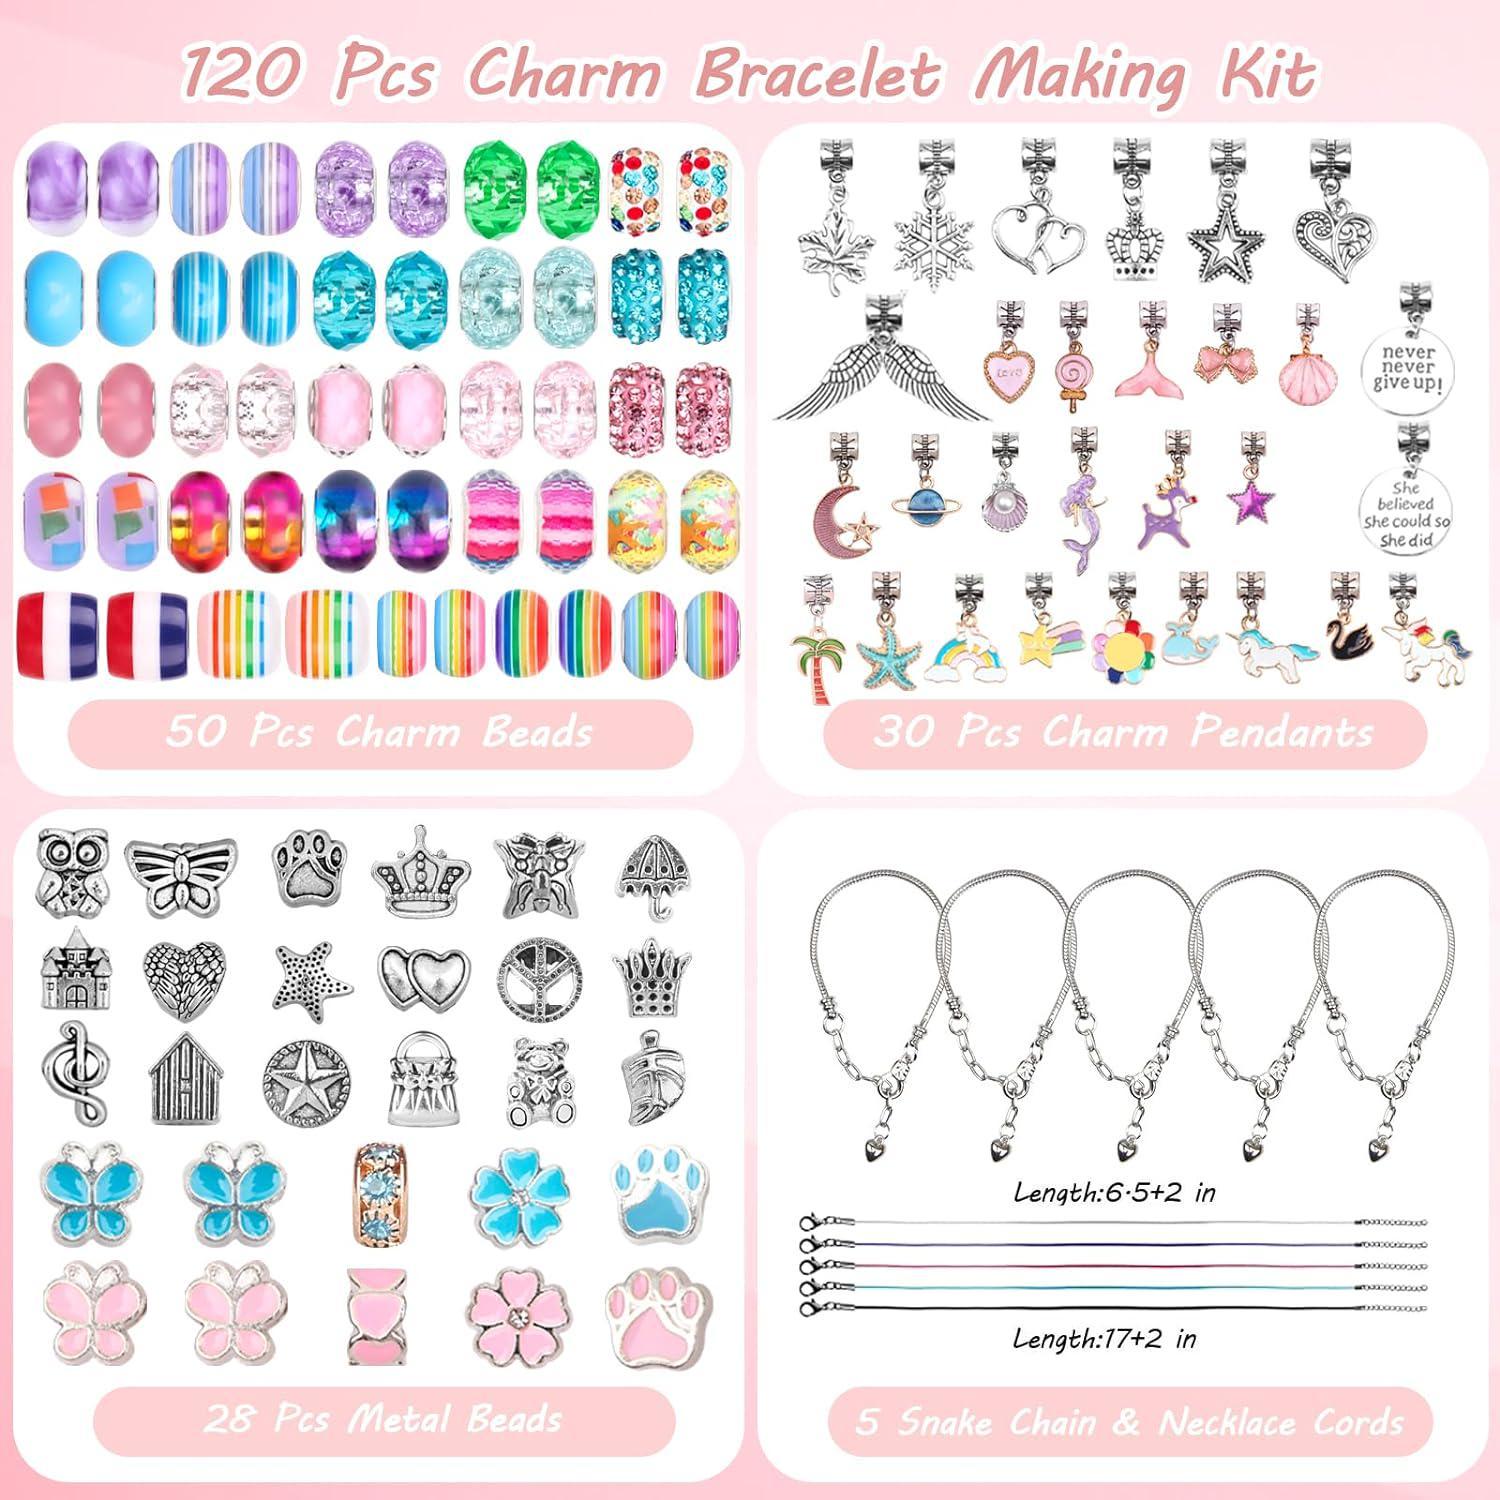 UFU Charm Bracelet Making Kit Girls Beads for Jewelry Making Kit, Unicorns  Arts Crafts Gifts Set for Teen Girls Age 5 6 7 8-12